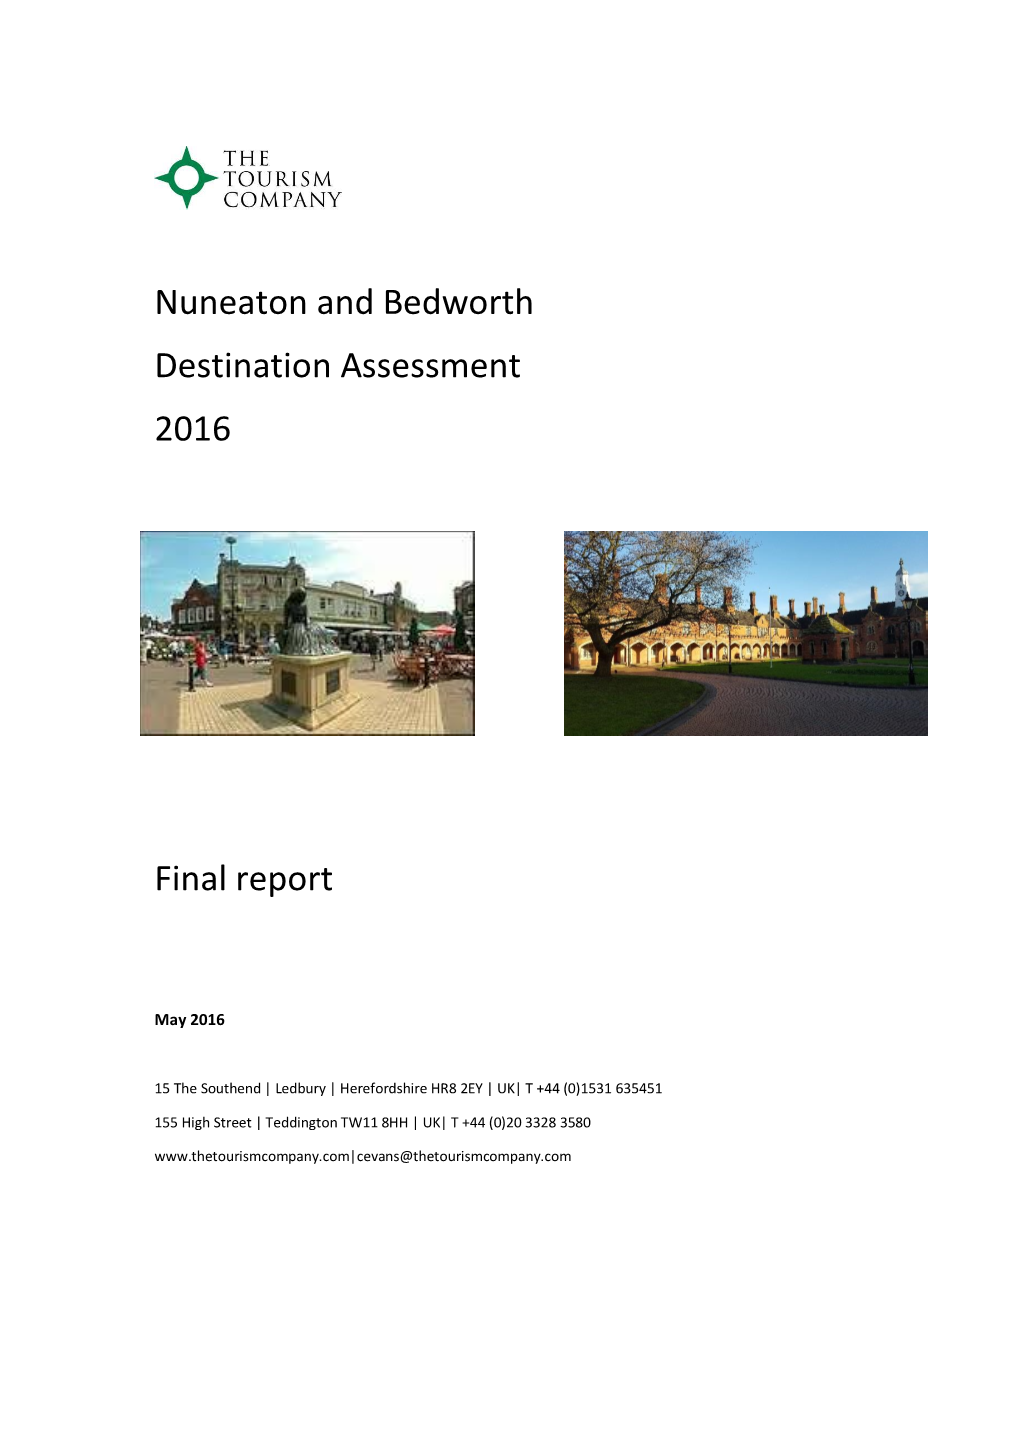 Nuneaton and Bedworth Destination Assessment 2016 Final Report